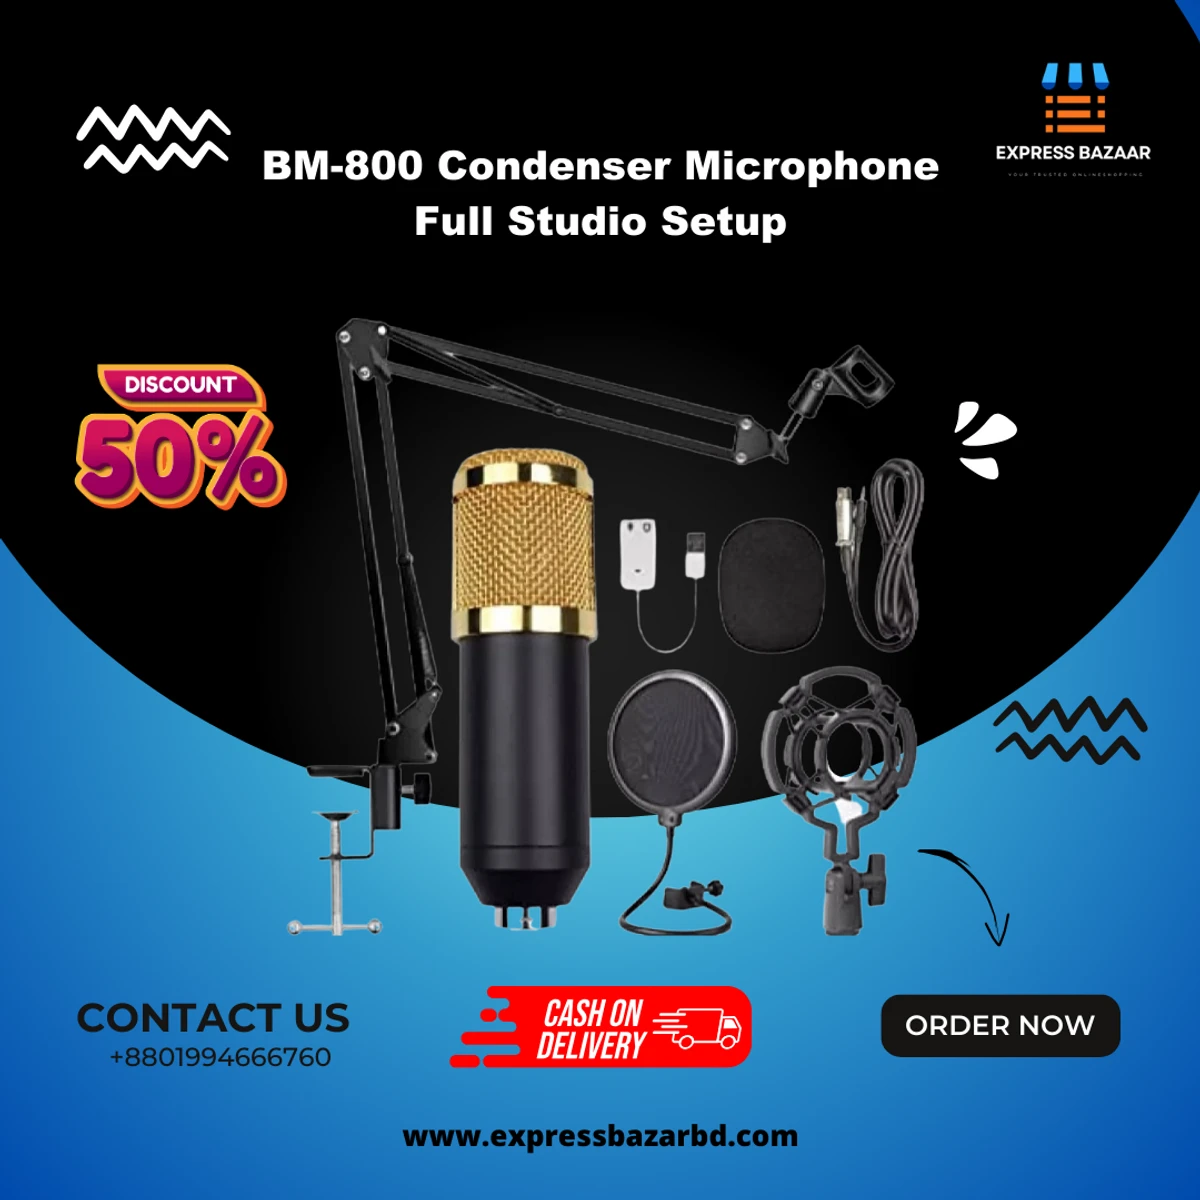 BM-800 Condenser Microphone Full Studio Setup